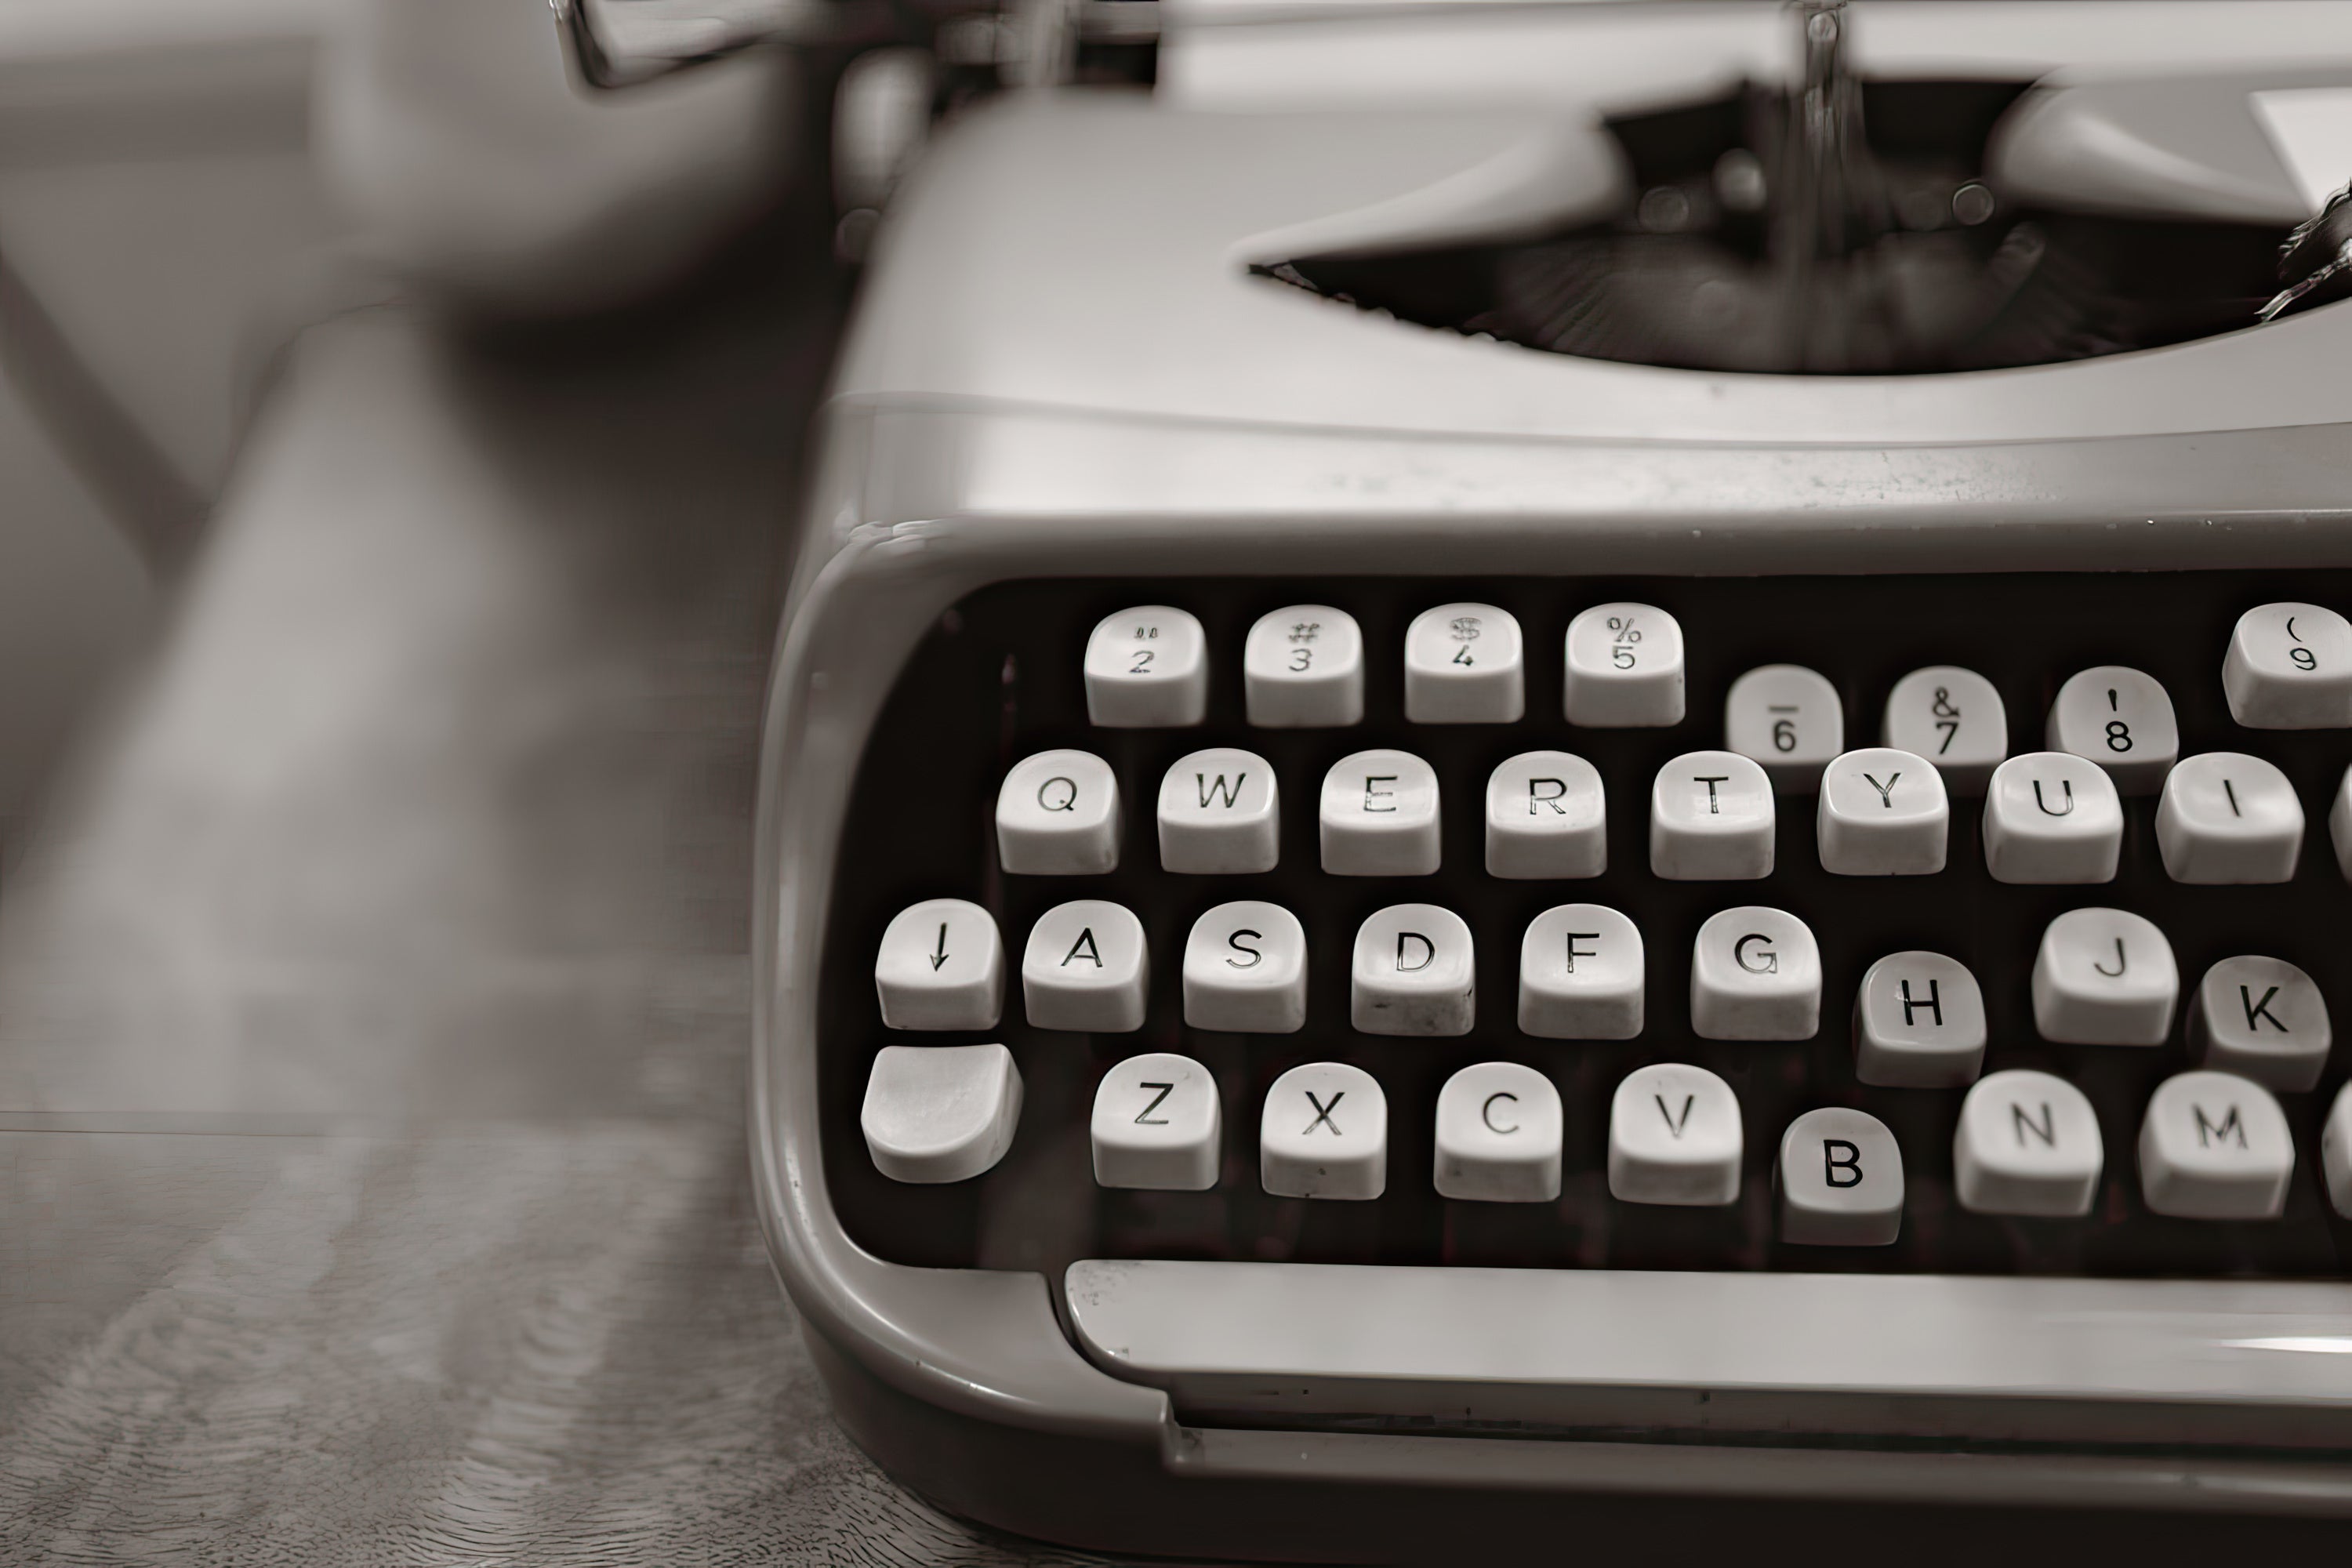 2023 First 10 Pages Showcase - Image of retro typewriter